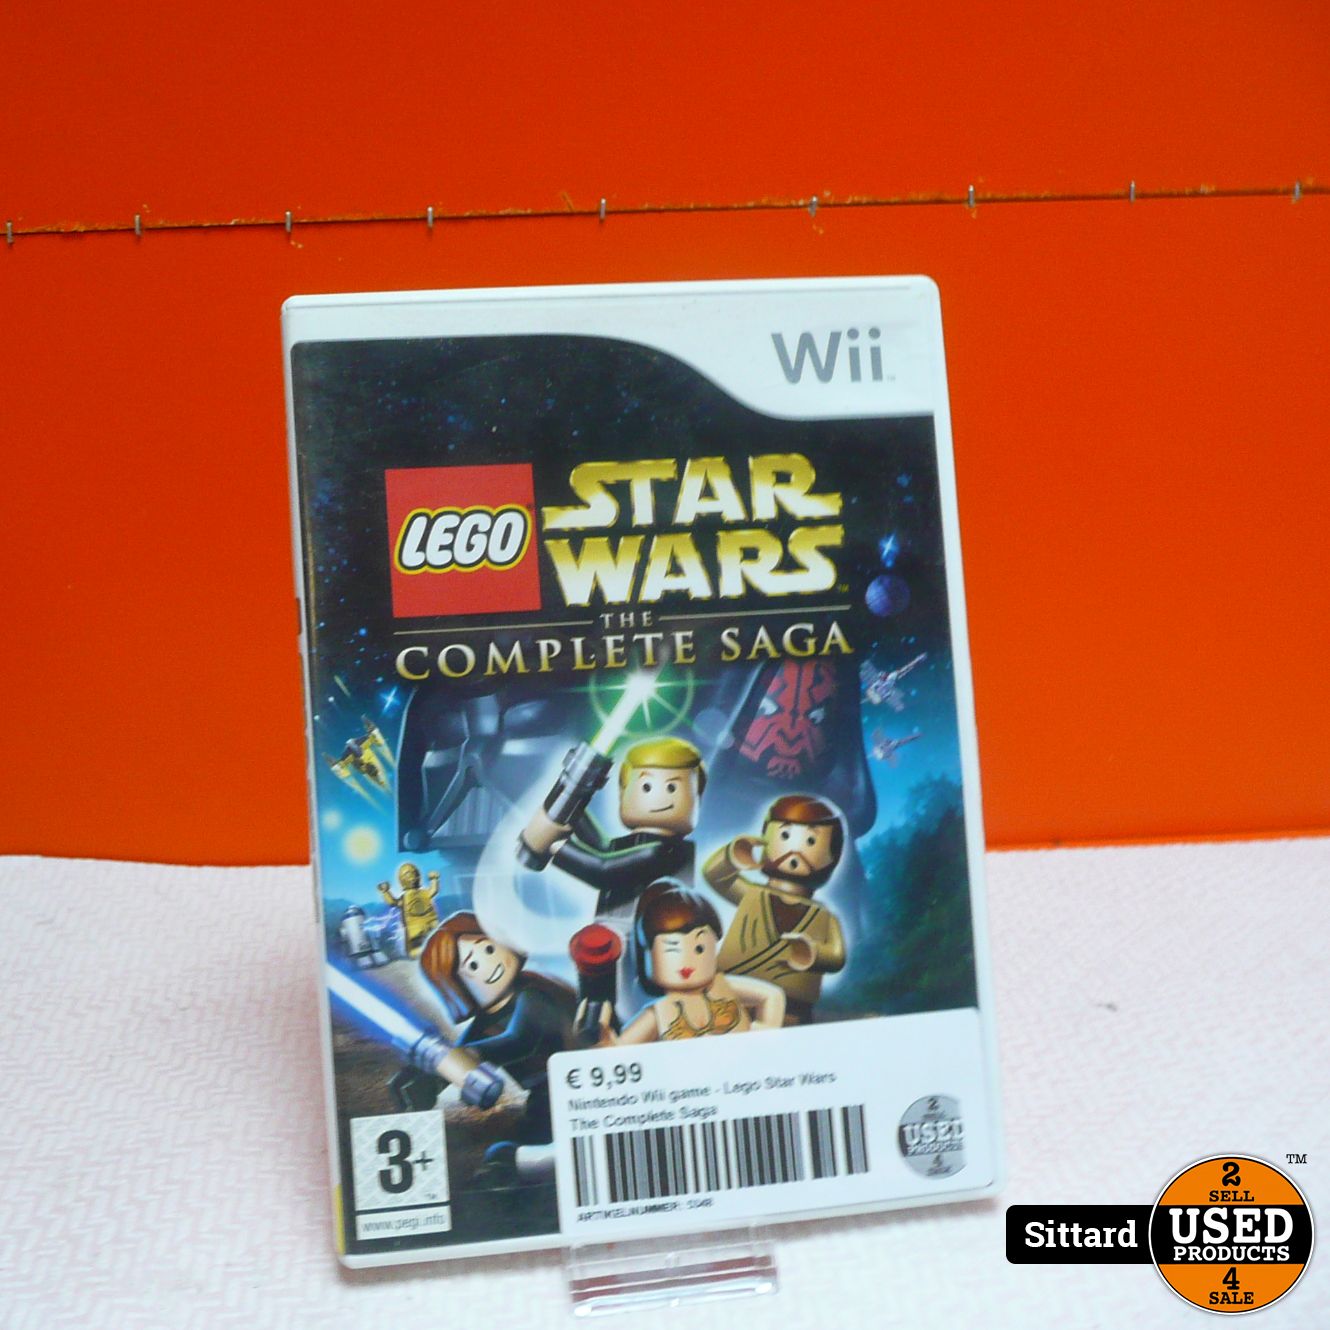 ruilen Alaska opslaan Nintendo Wii game - Lego Star Wars The Complete Saga - Used Products Sittard